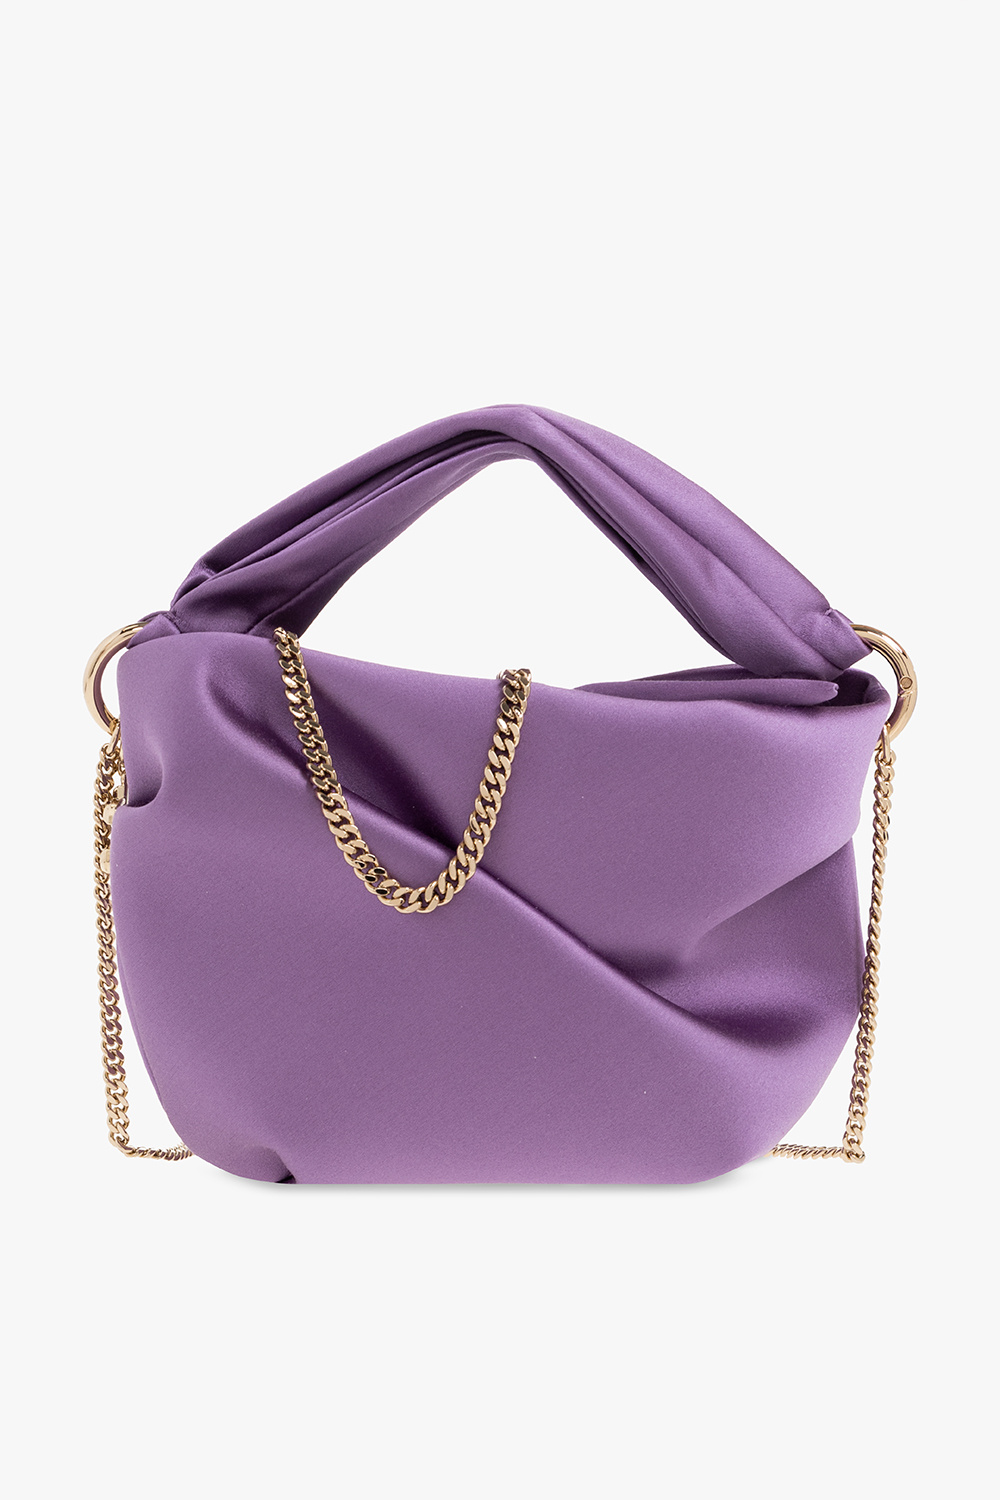 Chanel purple satin  Purple satin, Shoulder bag, Purple